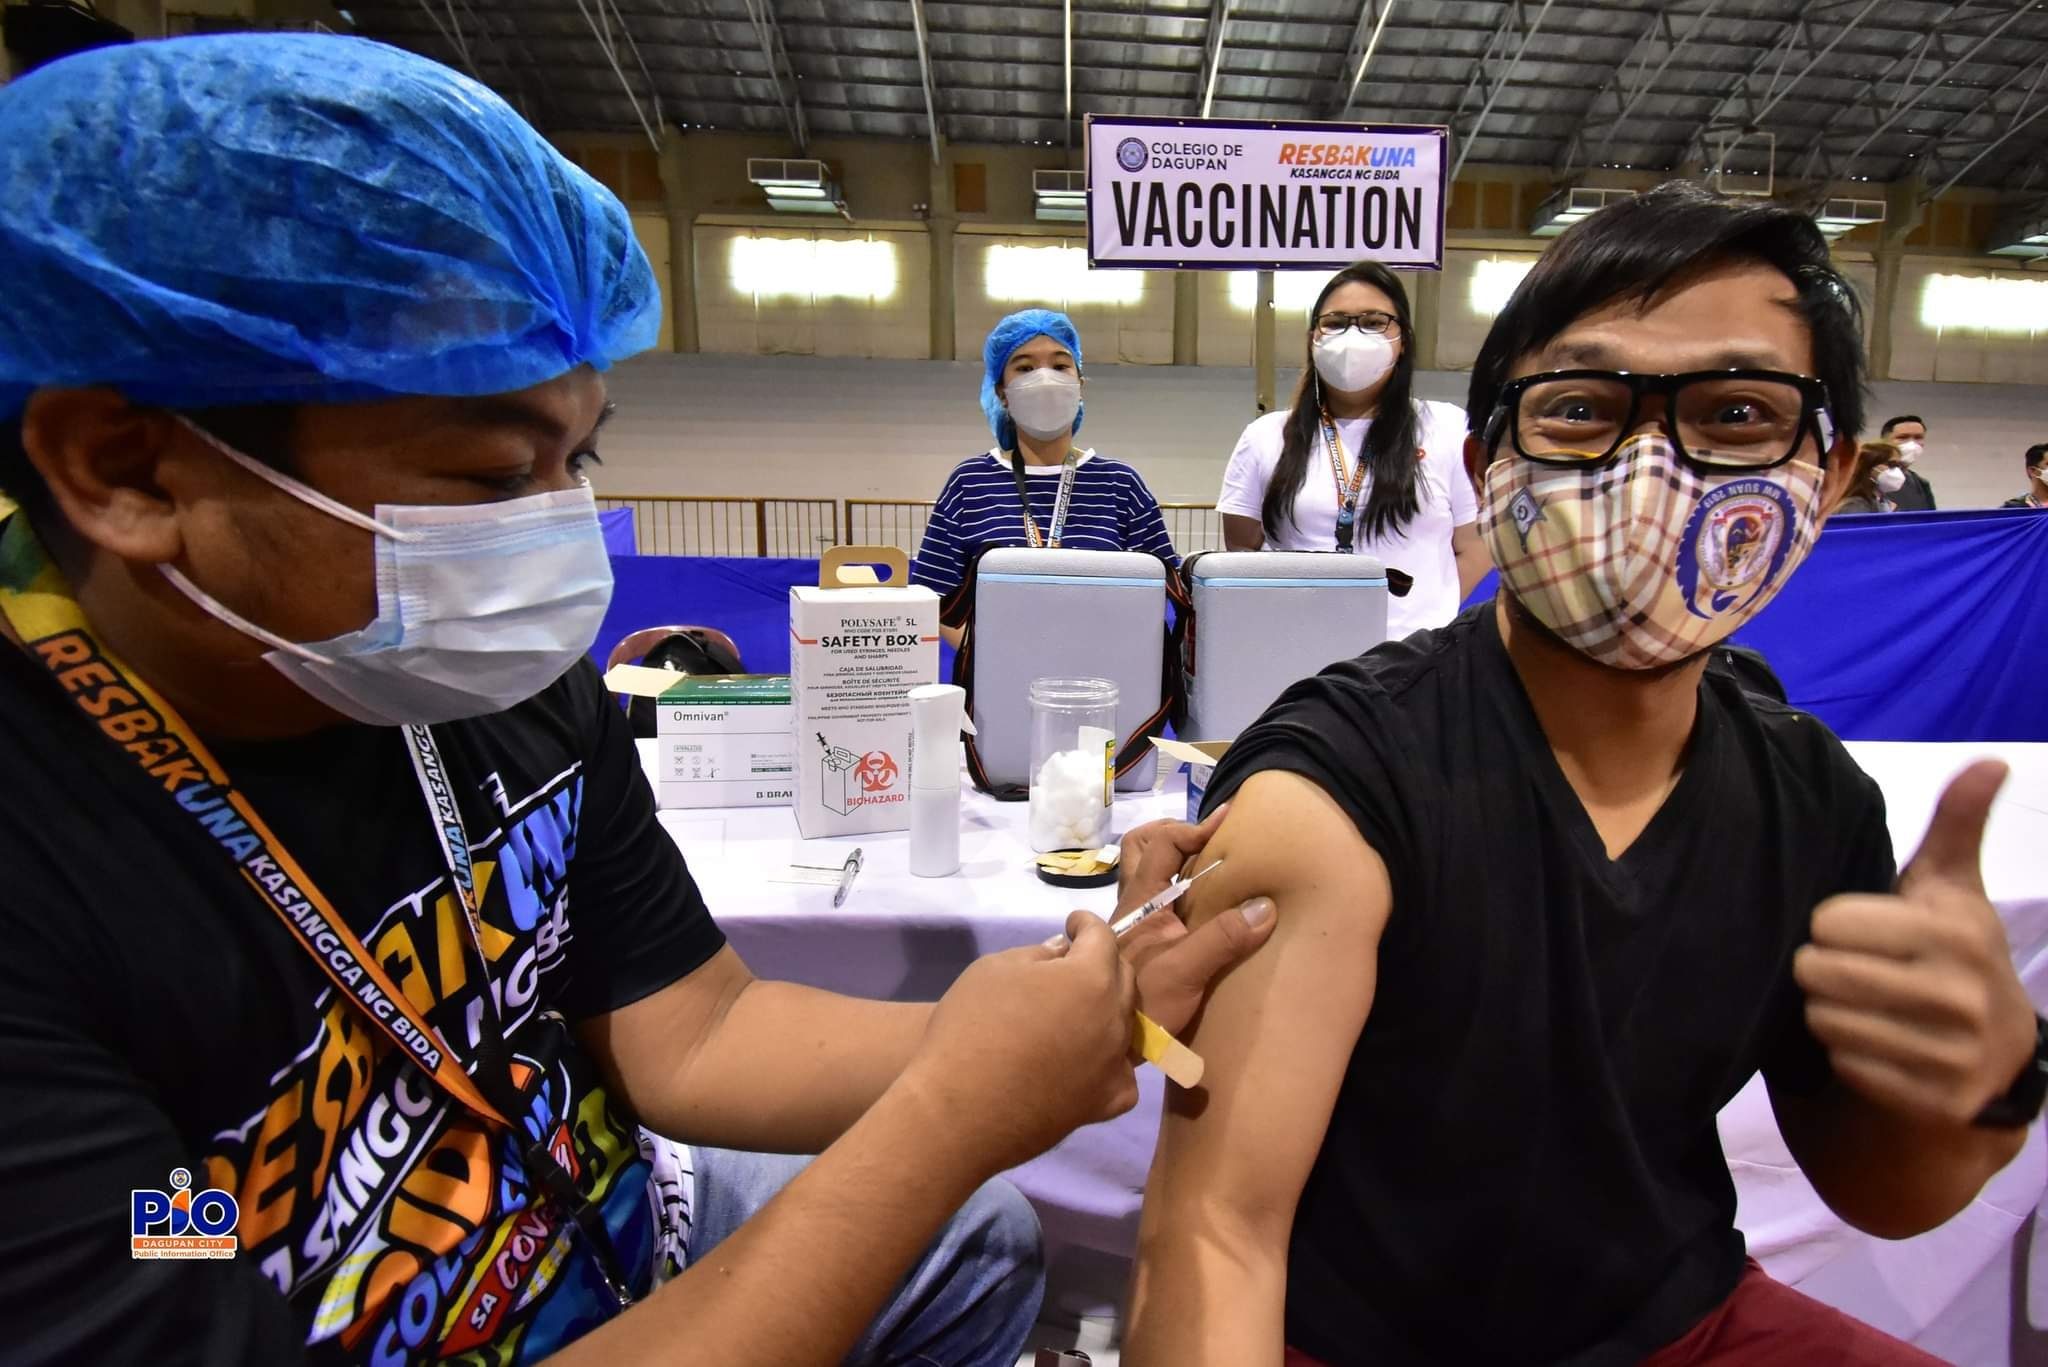 3.1 million in Ilocos Region fully vaccinated against COVID-19